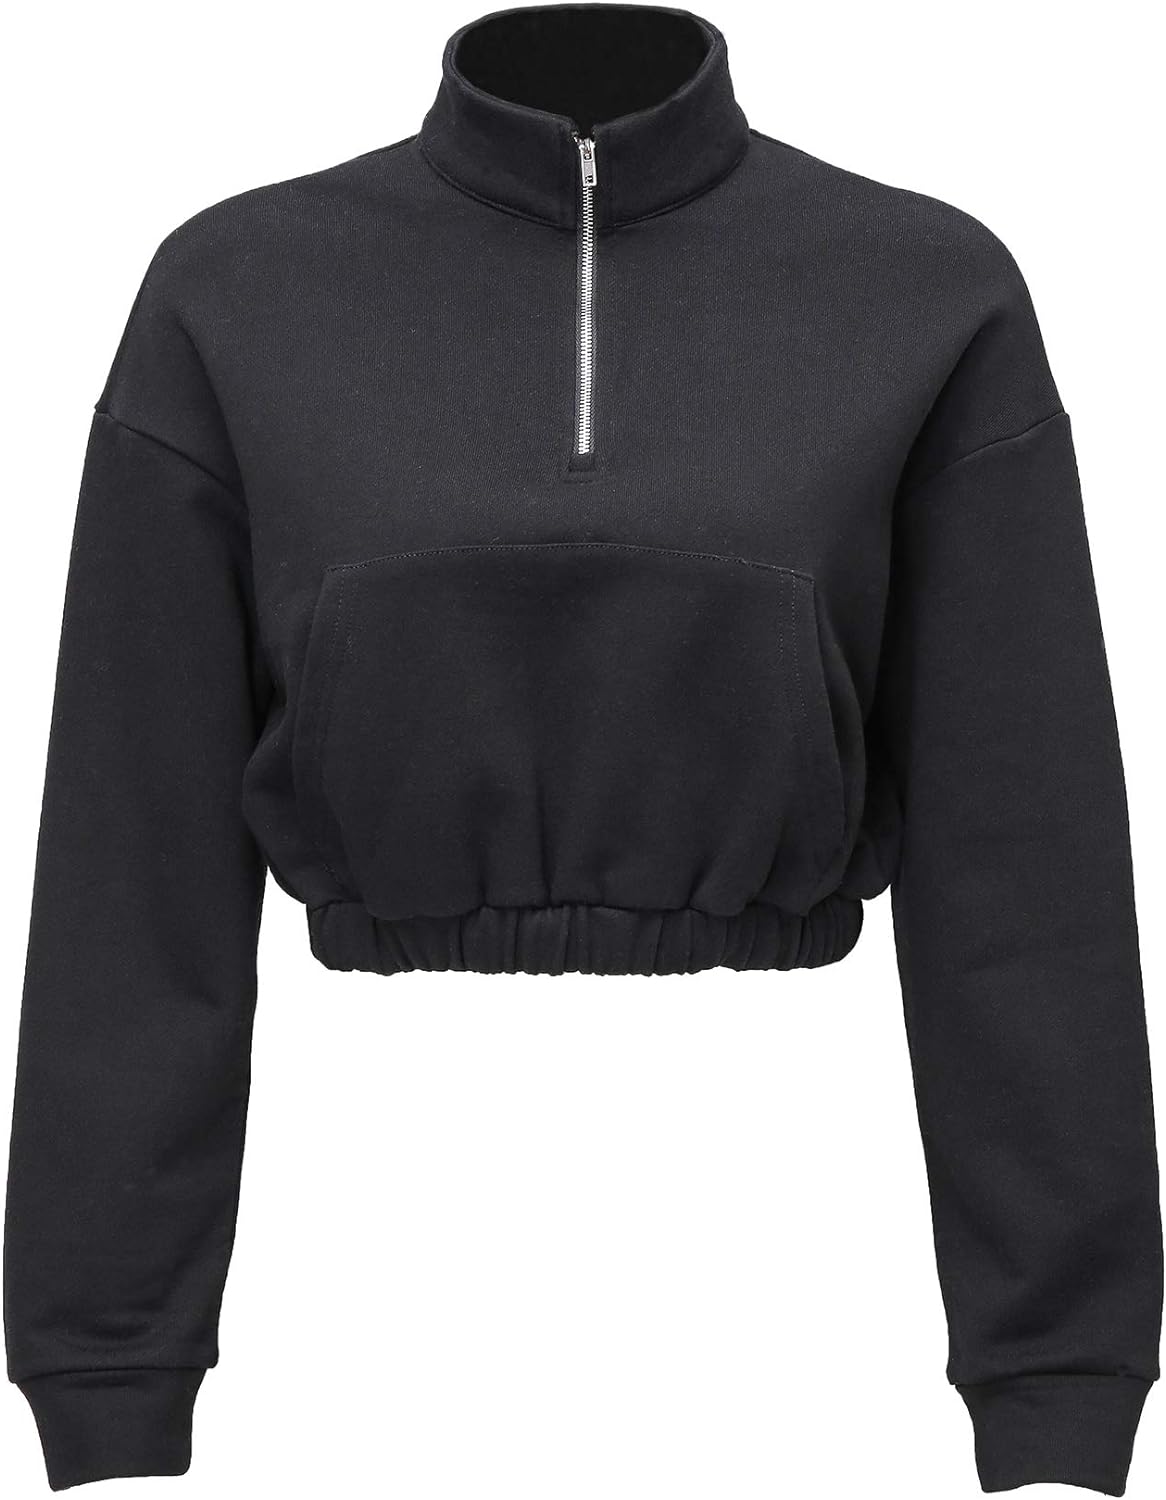 NTG Fad Black / Small Cropped Quarter Zip Pullover Sweatshirt Hoodie Crop Top